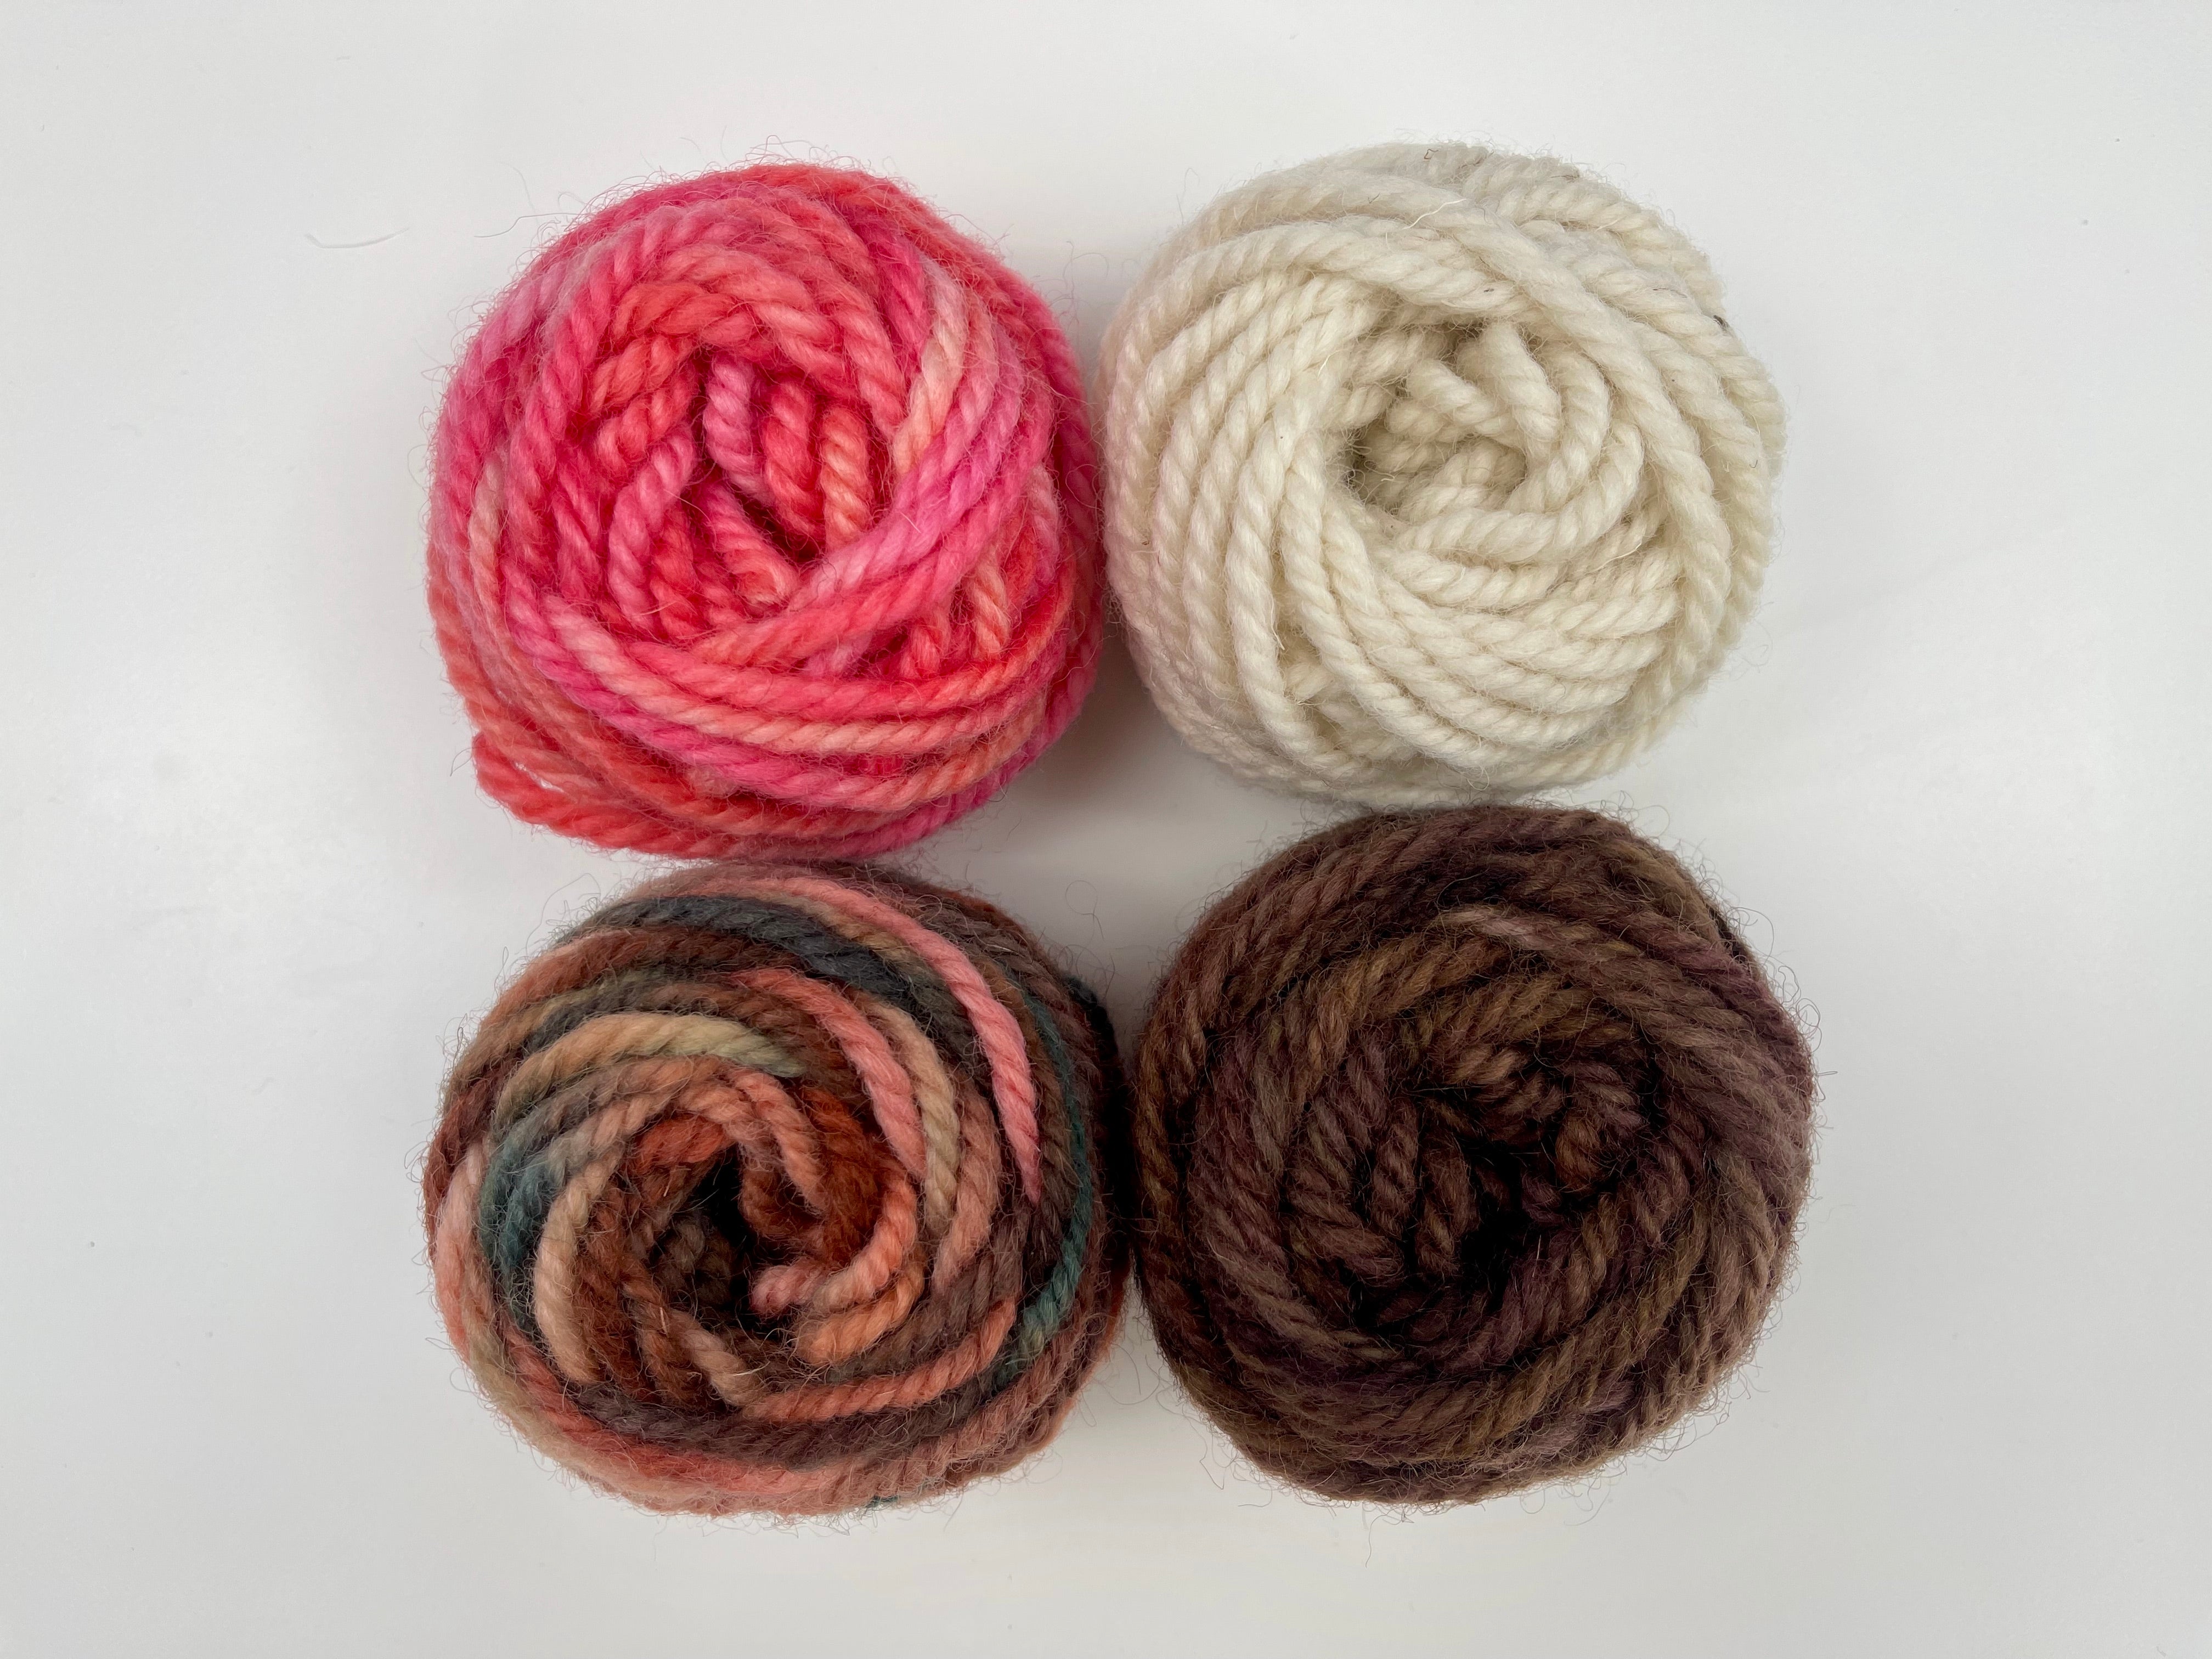 Crochet Books & Patterns – Oxford Yarn Store